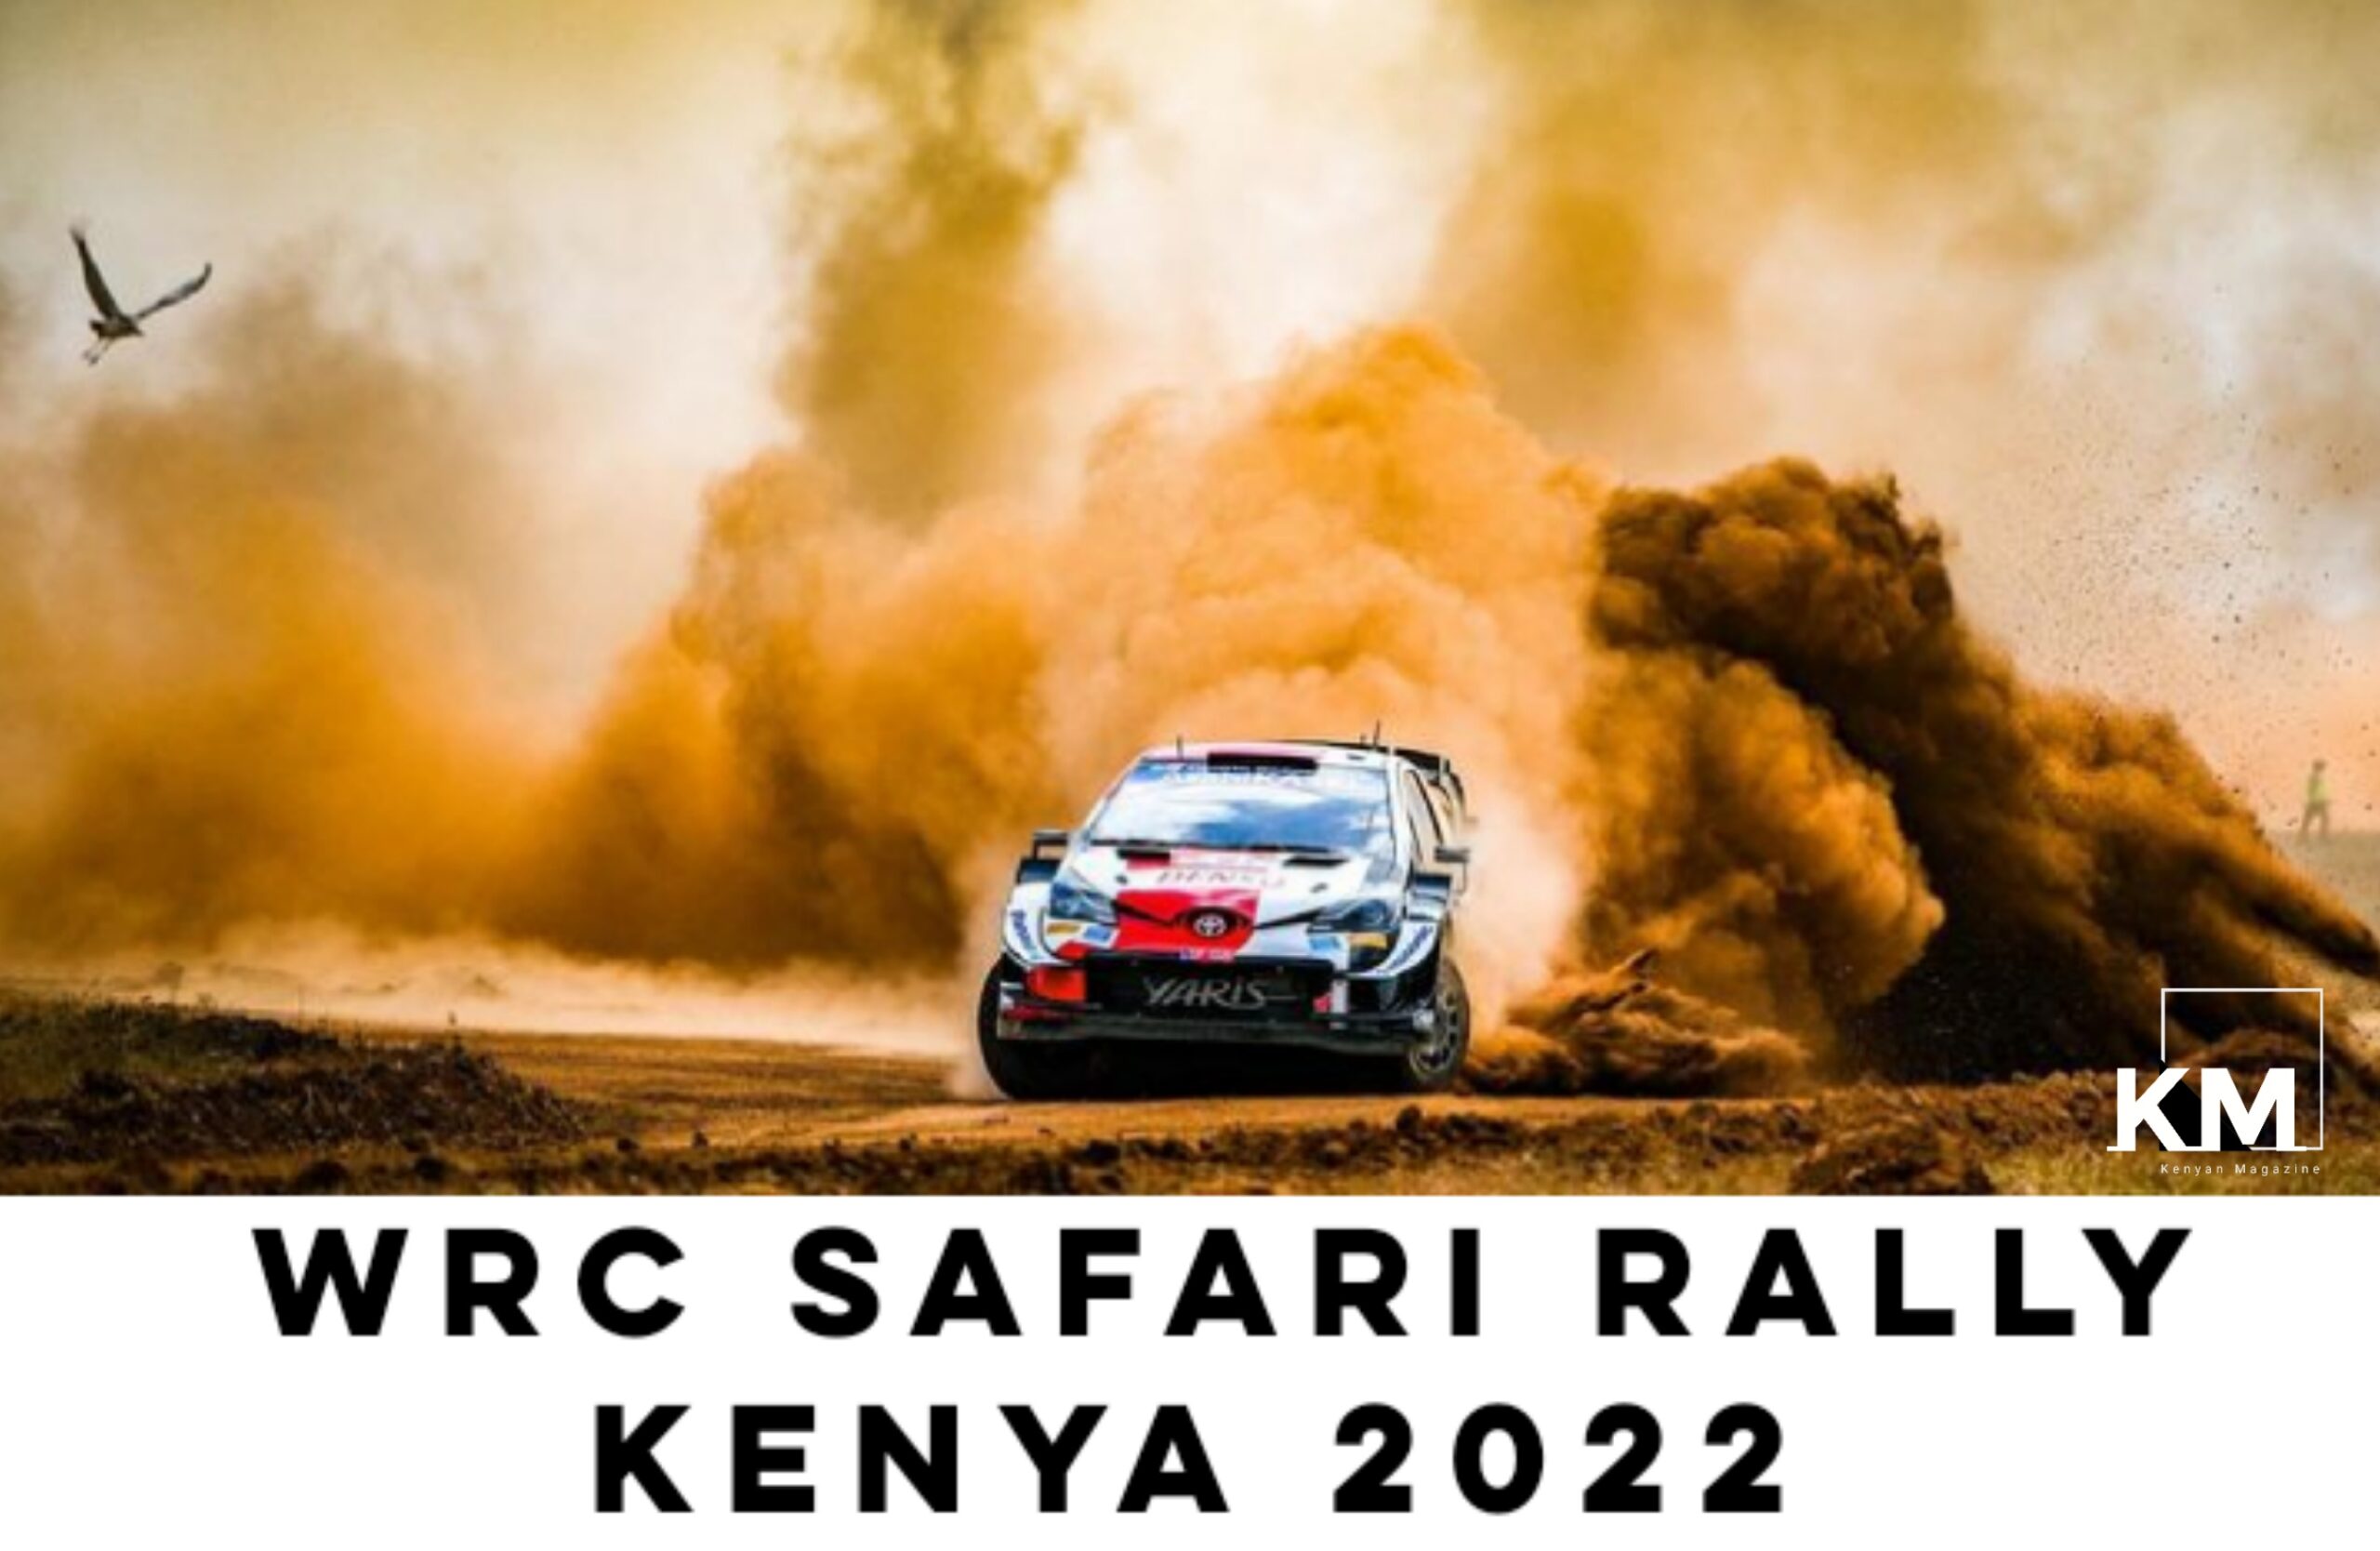 kenya safari rally 2022 live stream